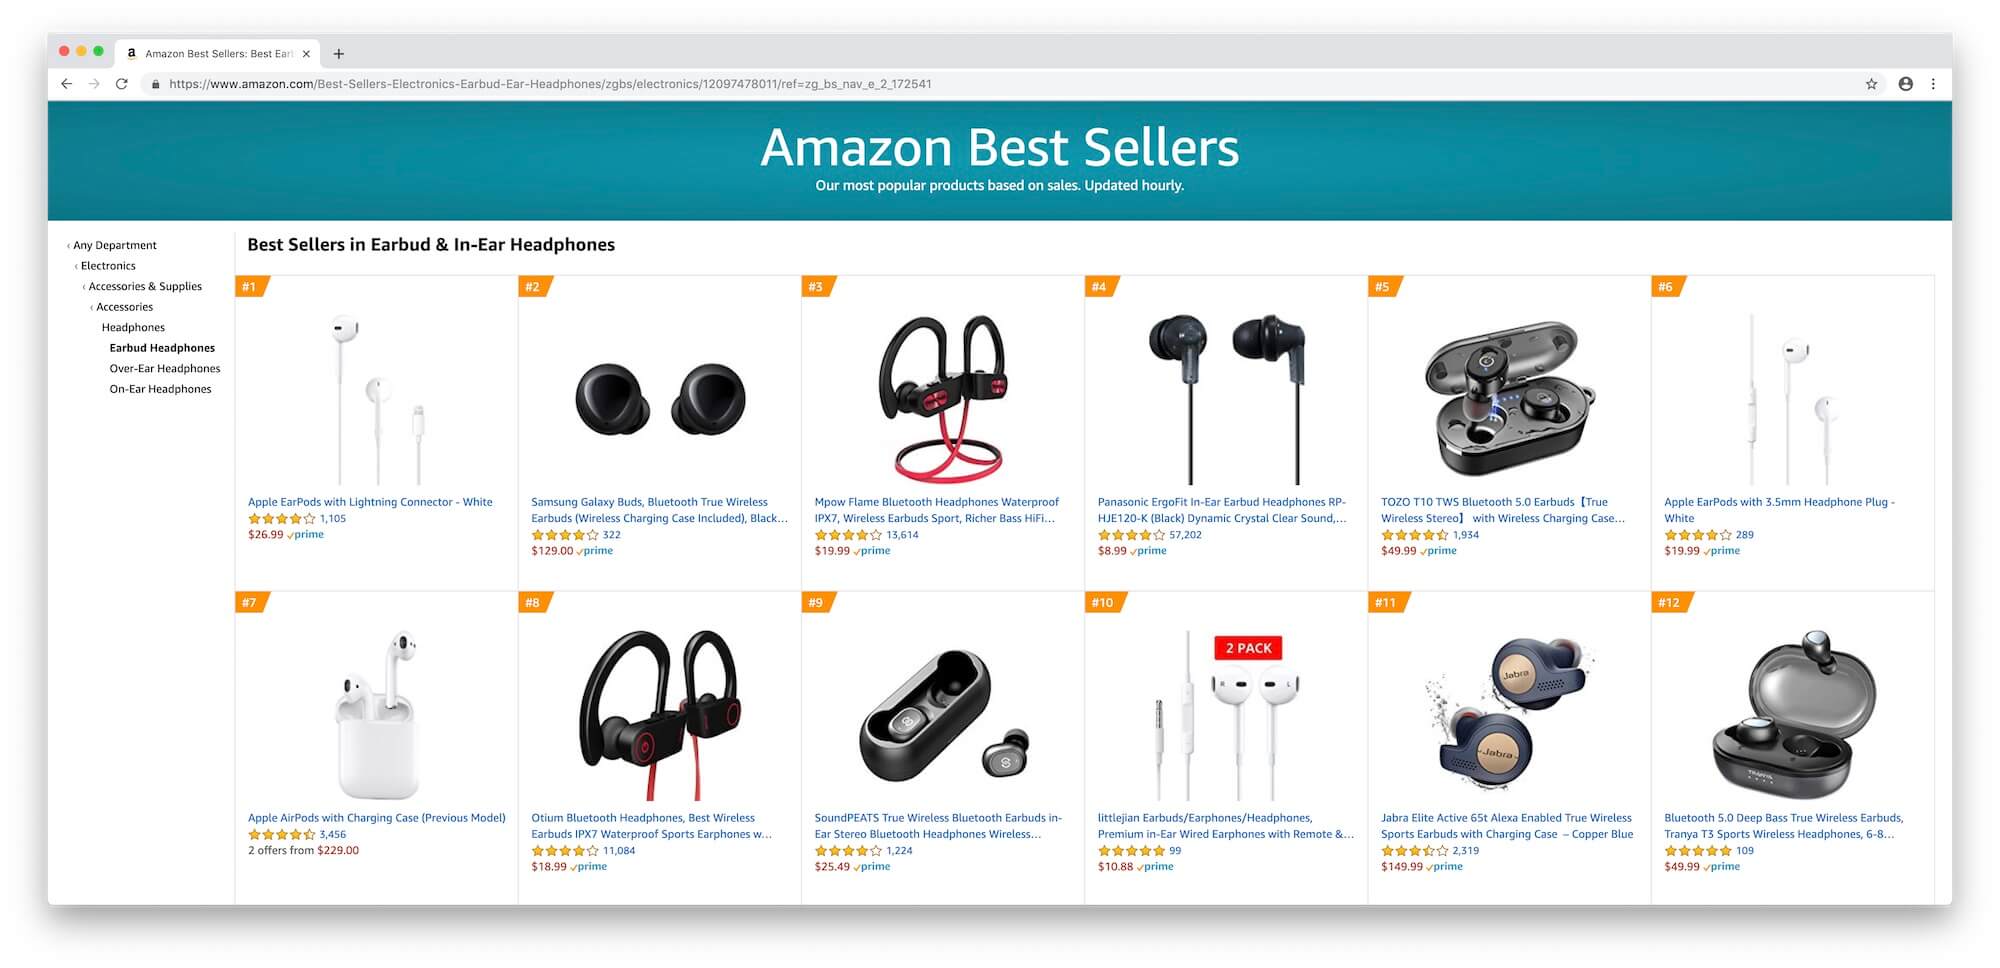 Amazon Best Sellers Rank